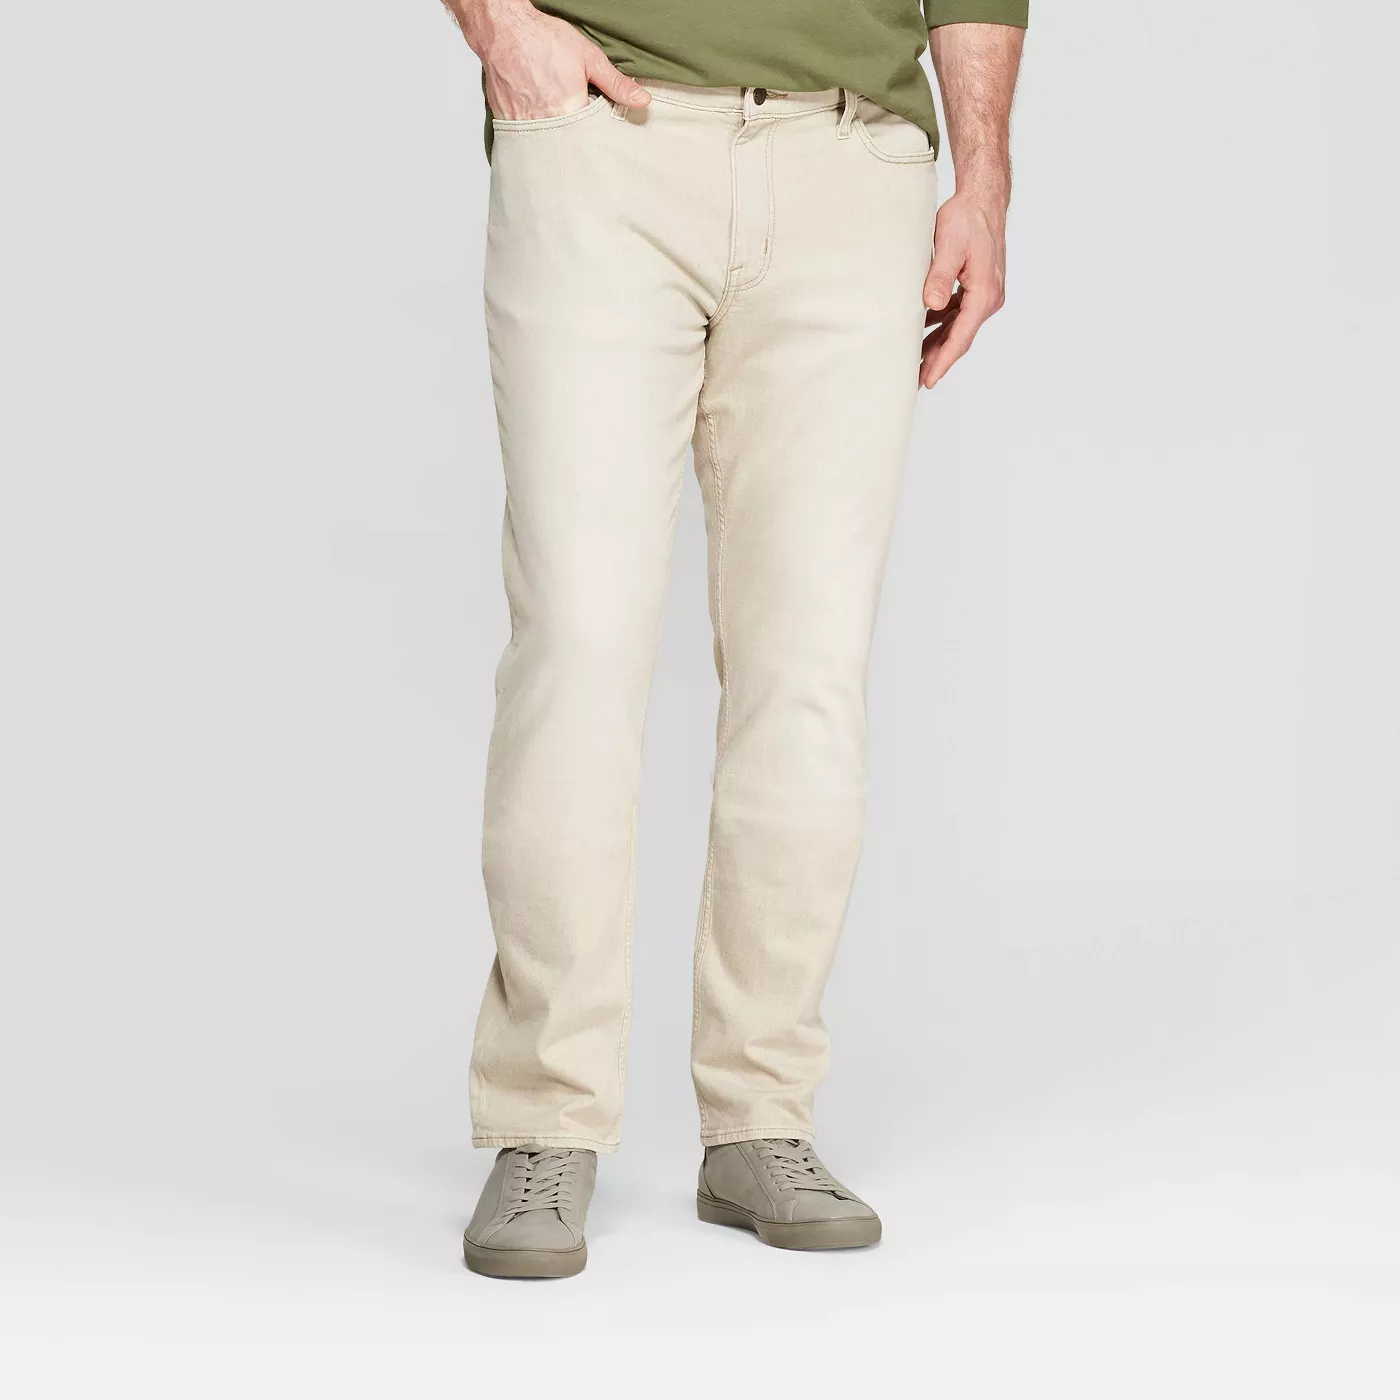 Men's Tall Slim Fit Jeans - Goodfellow & Coâ¢ Khaki - image 1 of 3